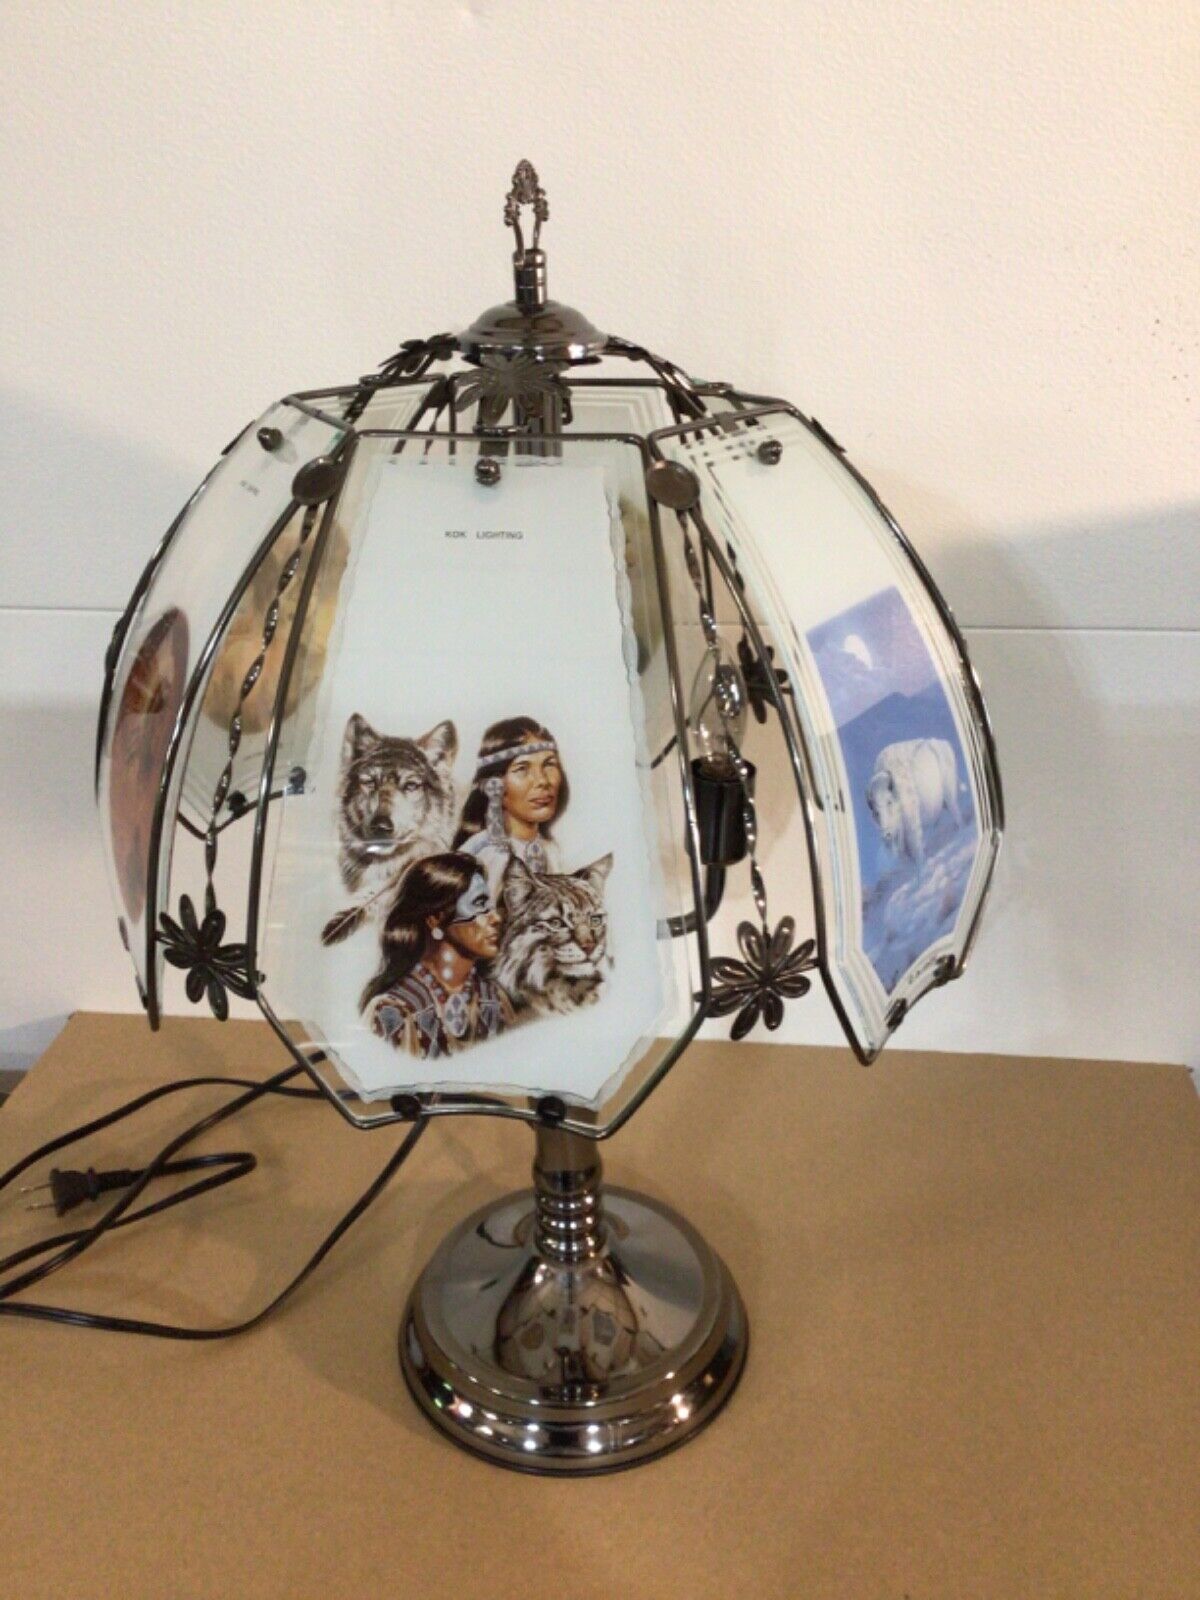 Native American Indian 3-way Touch Lamp OK Lighting table lamp buffalo wolf deer